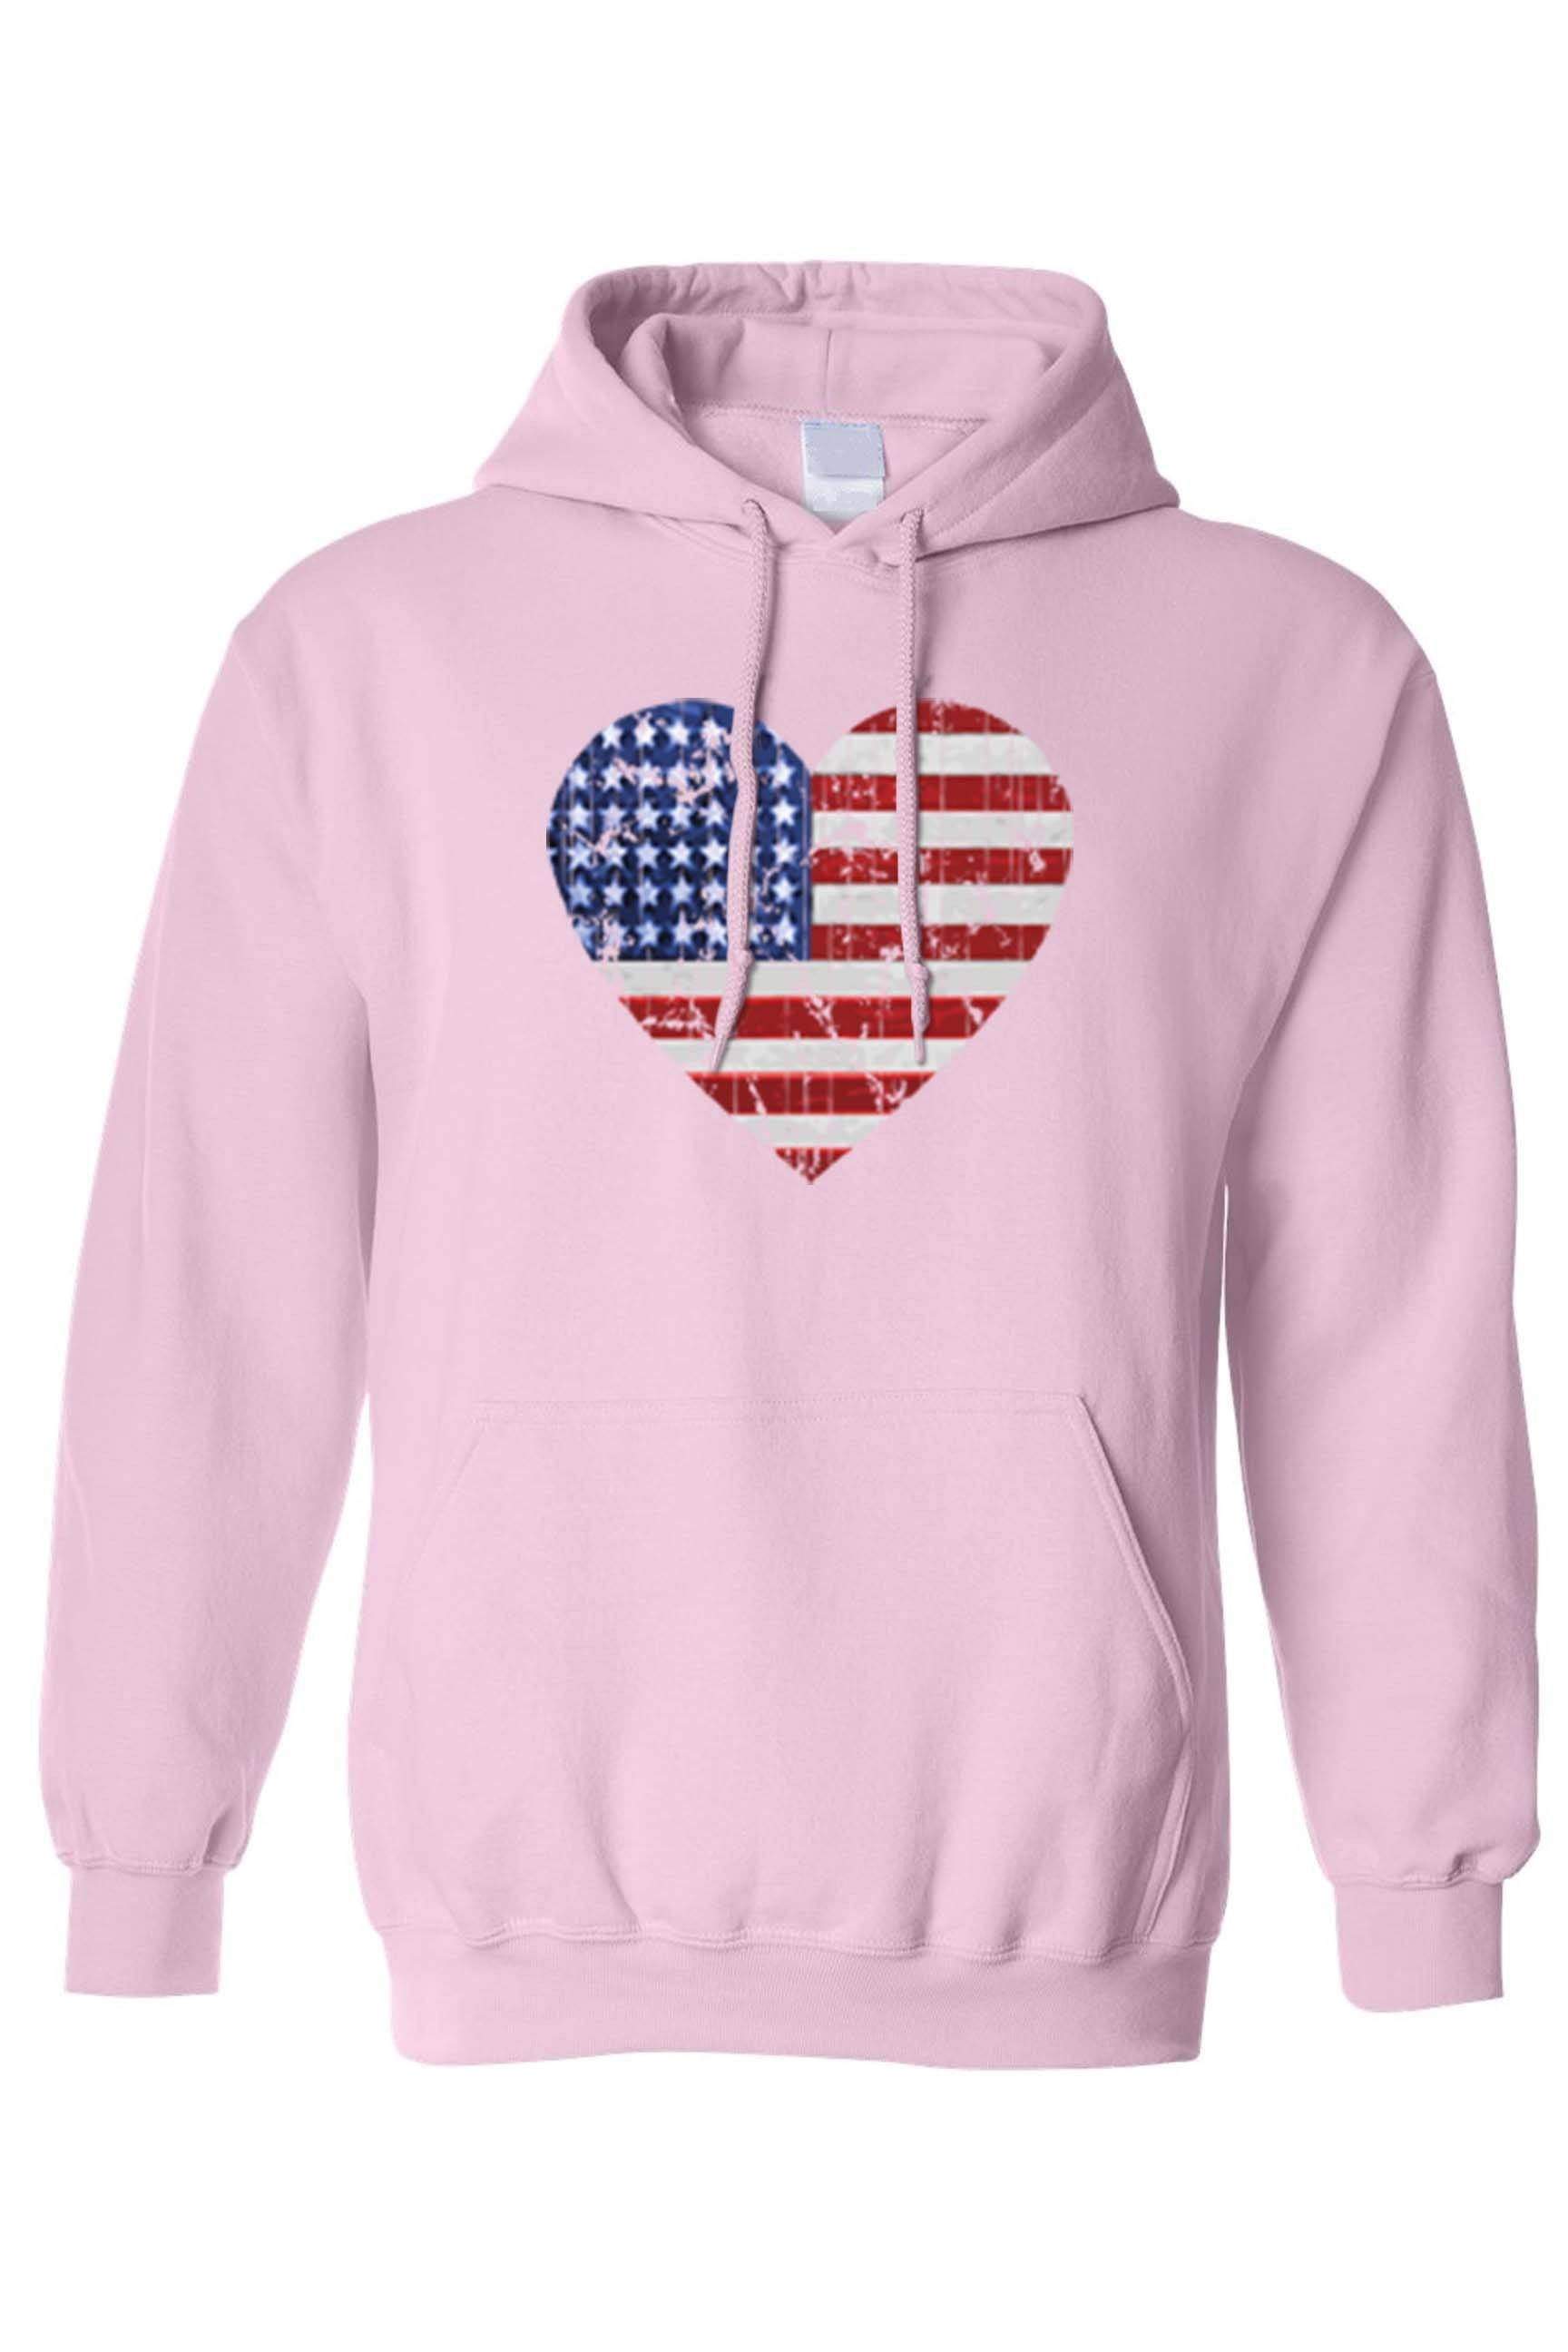 Men's/Unisex Pullover USA Flag  Hoodie